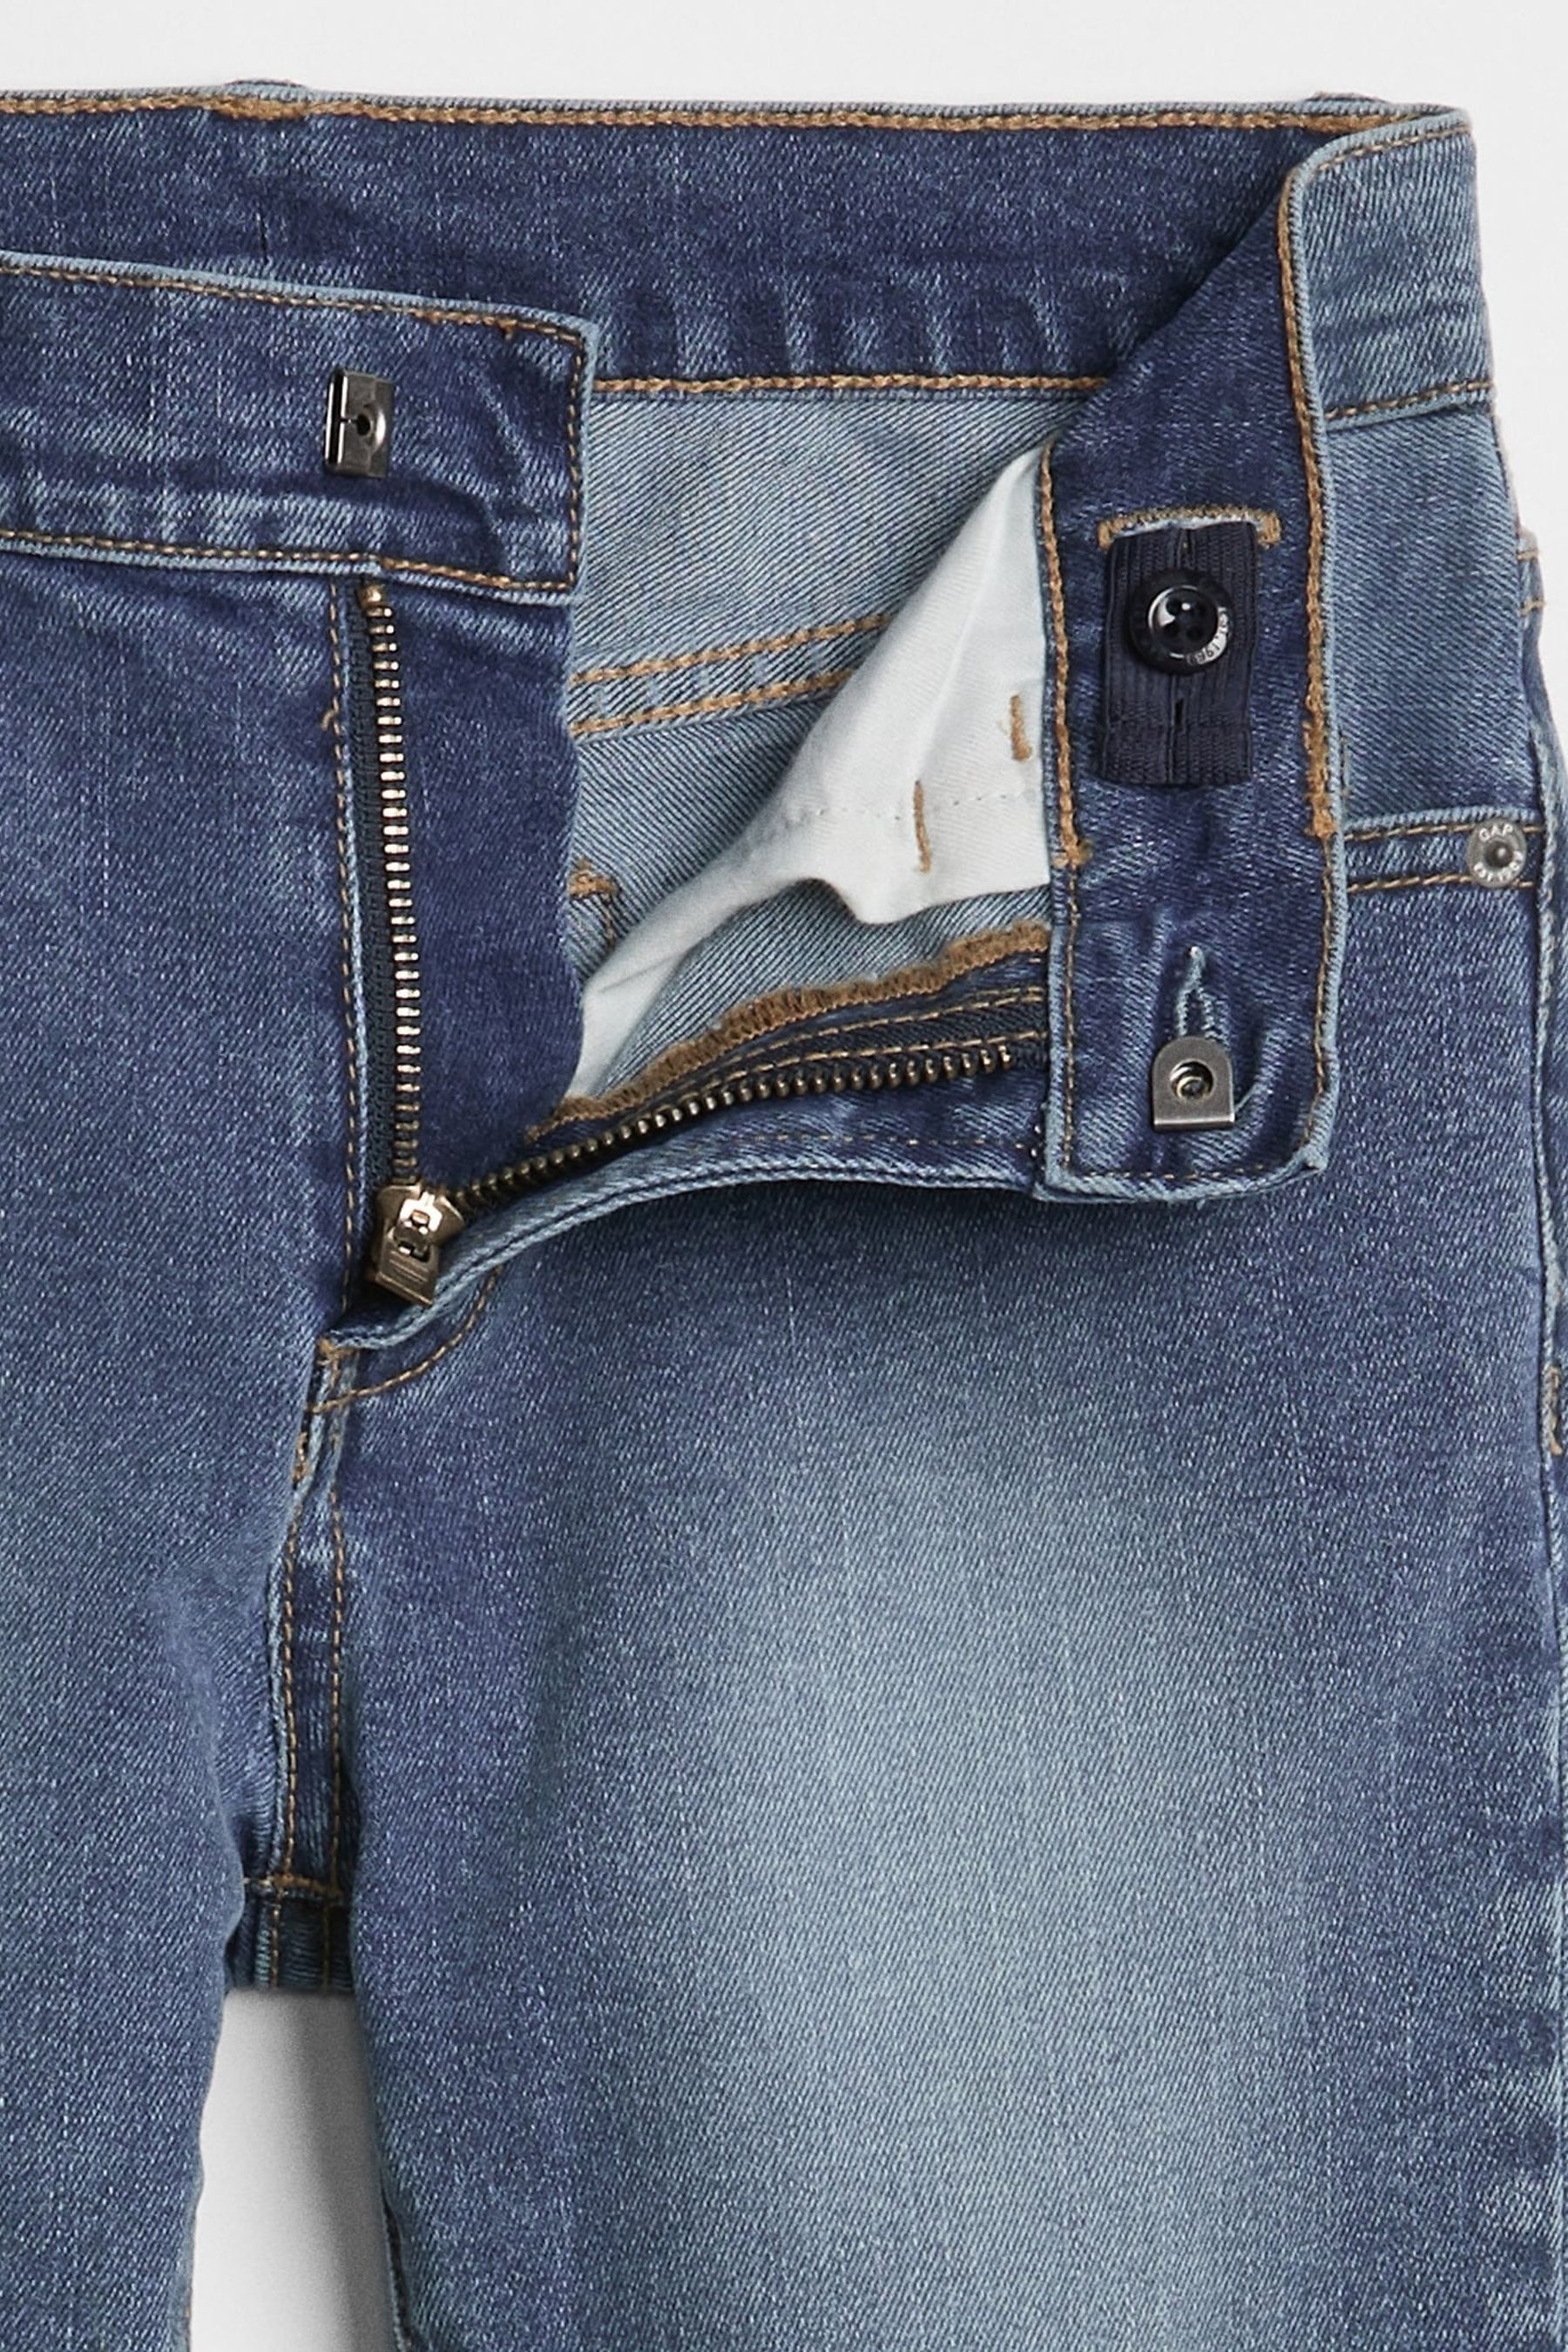 Buy Gap Light Wash Blue Slim Fit Jeans from the Next UK online shop